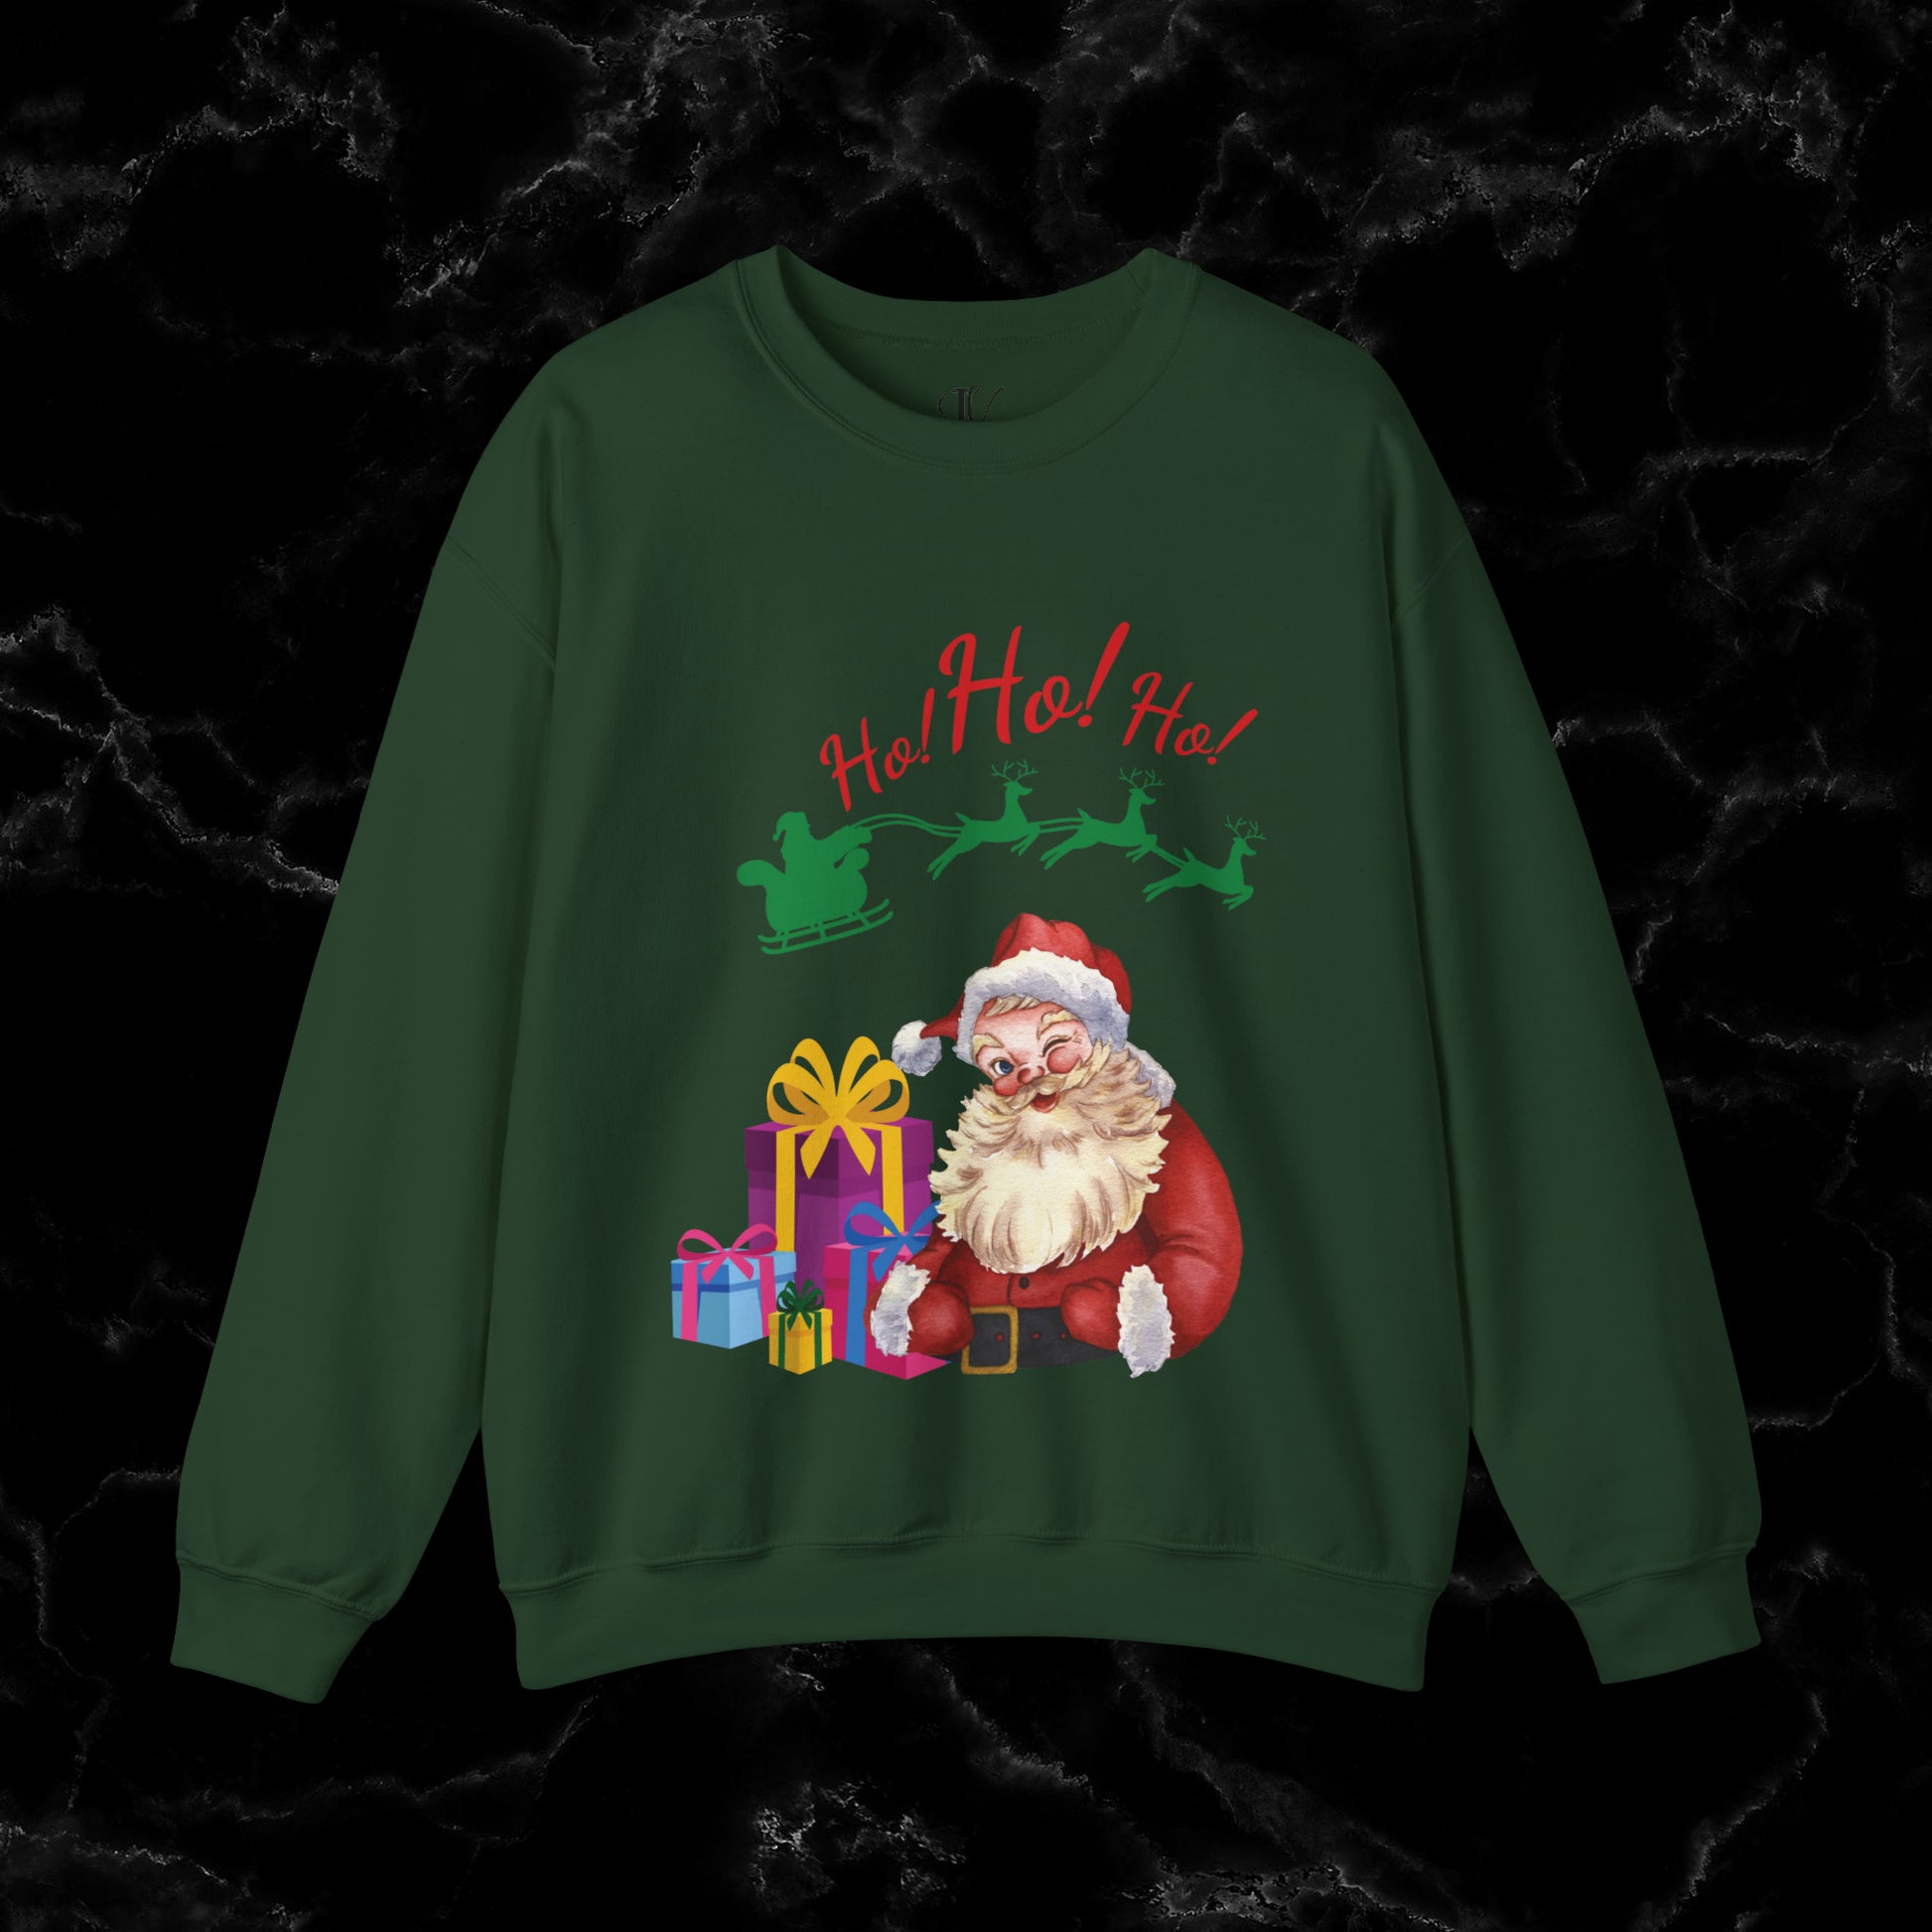 Retro Santa Sweatshirt - Vintage Christmas Fashion for Holiday Cheer Sweatshirt S Forest Green 